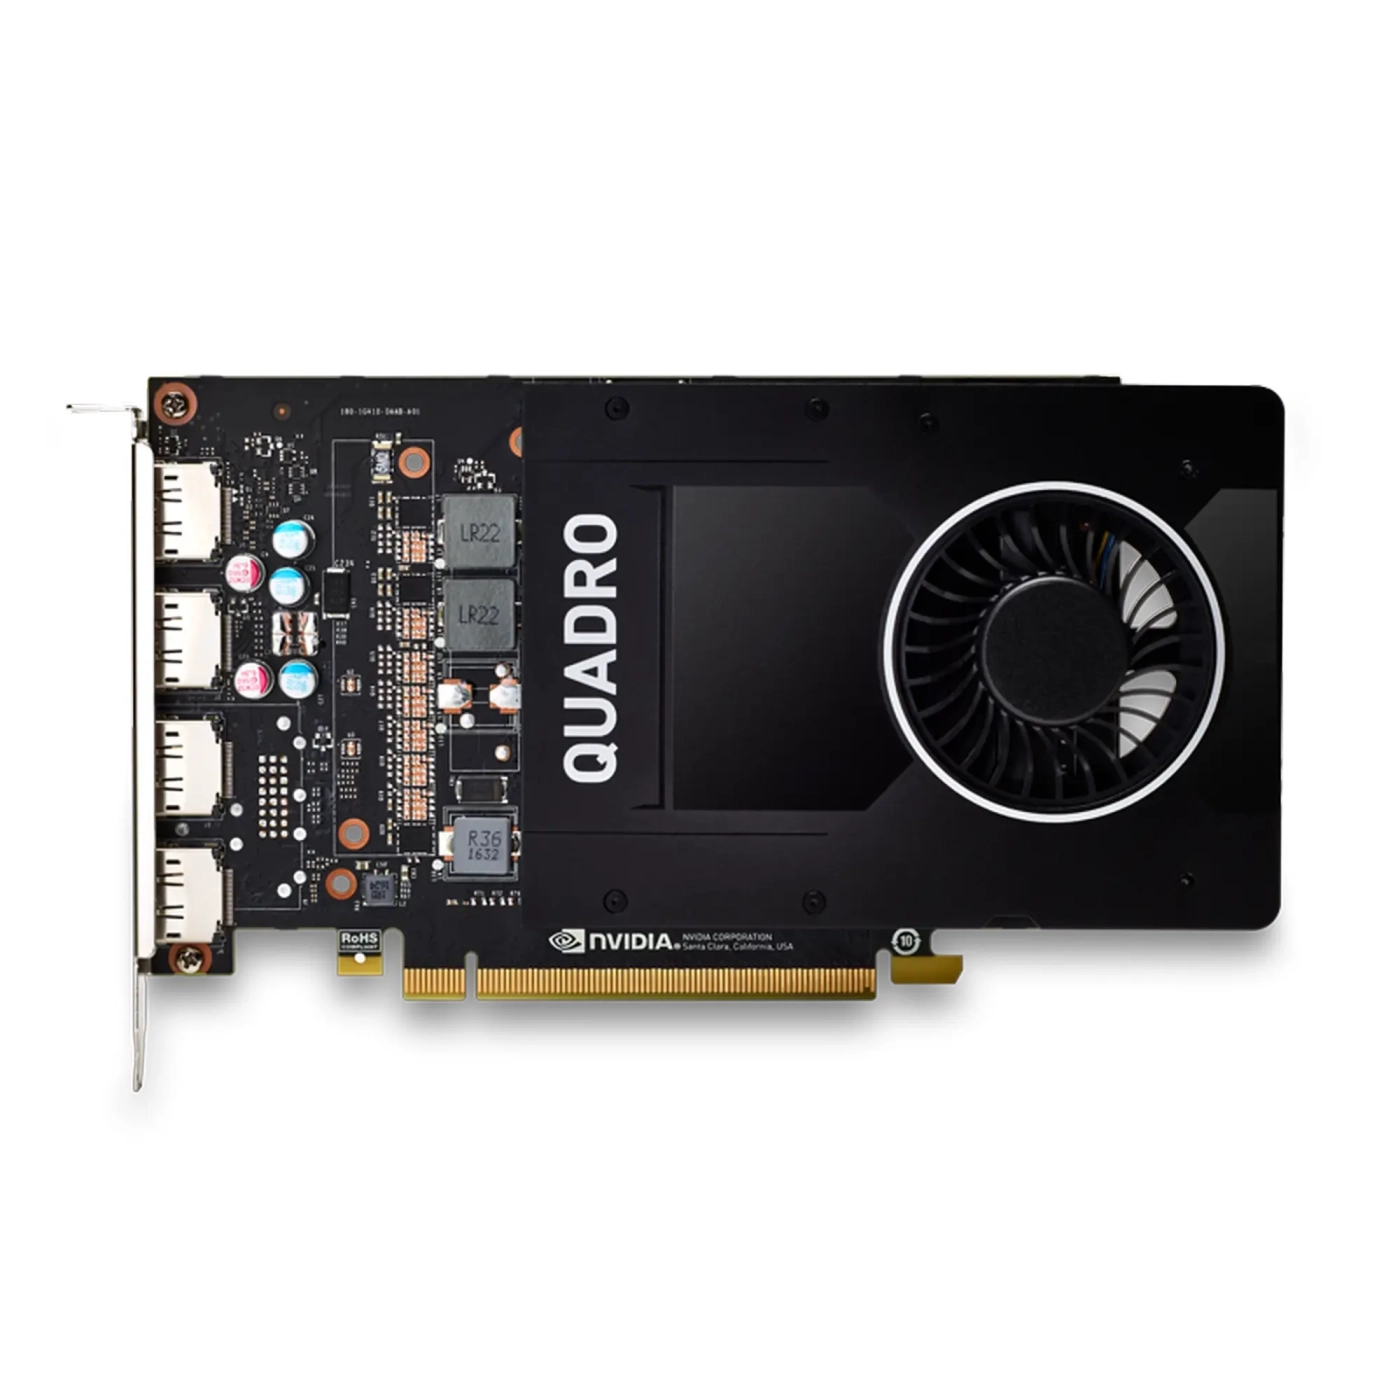 Купить Видеокарта PNY Nvidia Quadro P2000 5G - фото 1